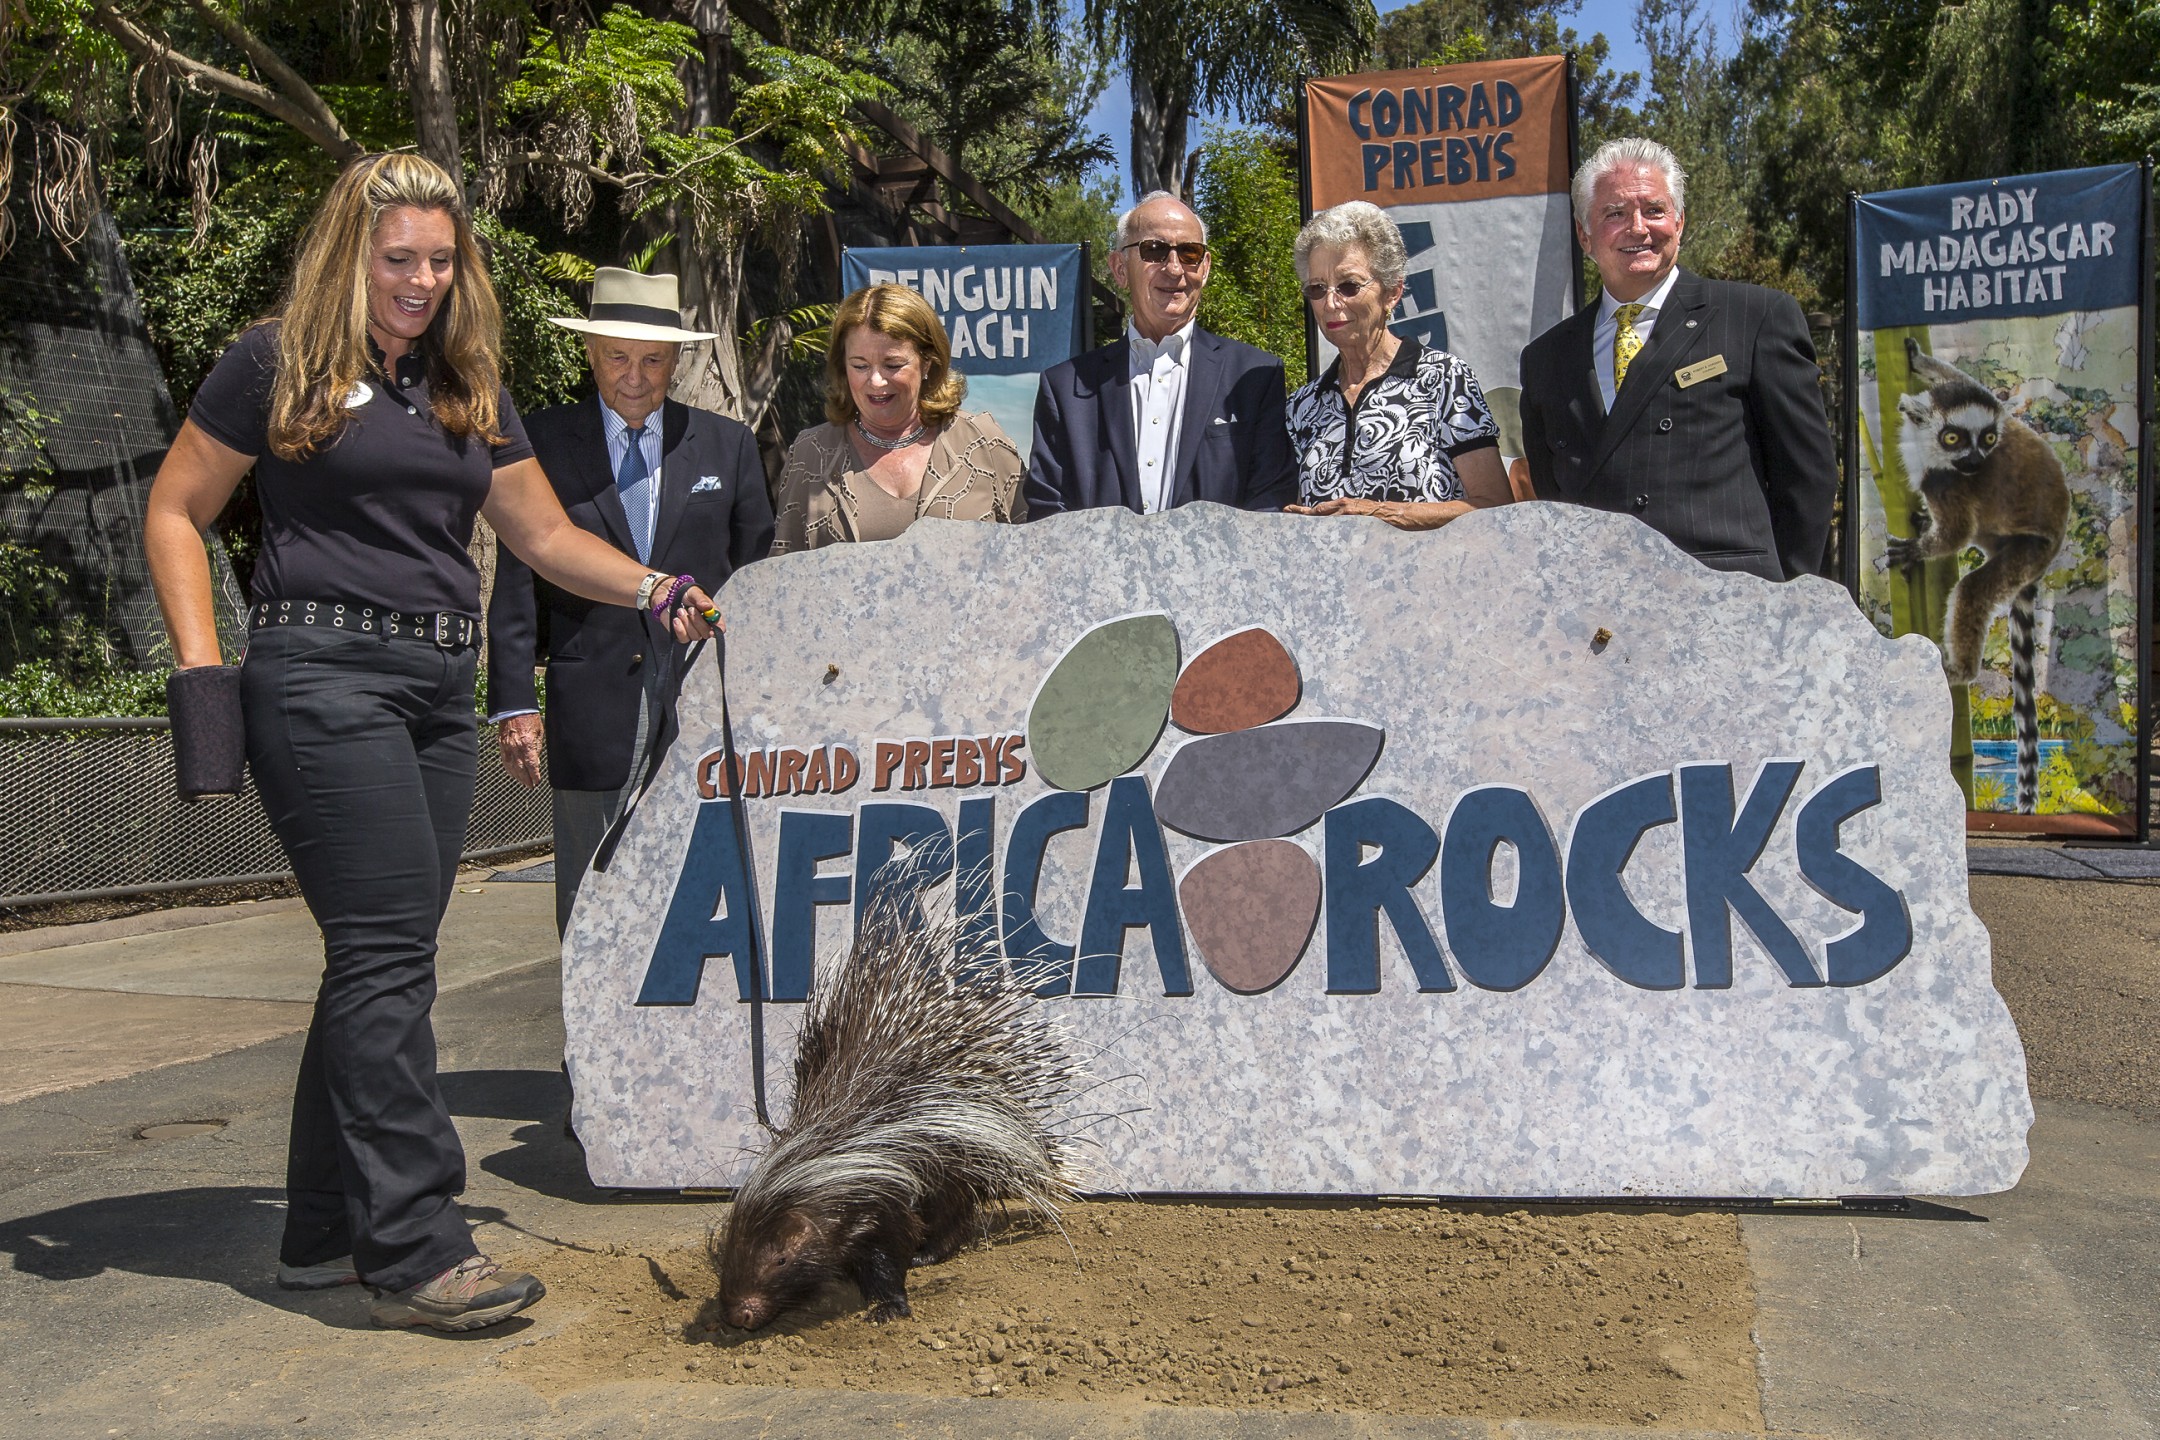 Groundbreaking ceremony for Conrad Prebys Africa Rocks